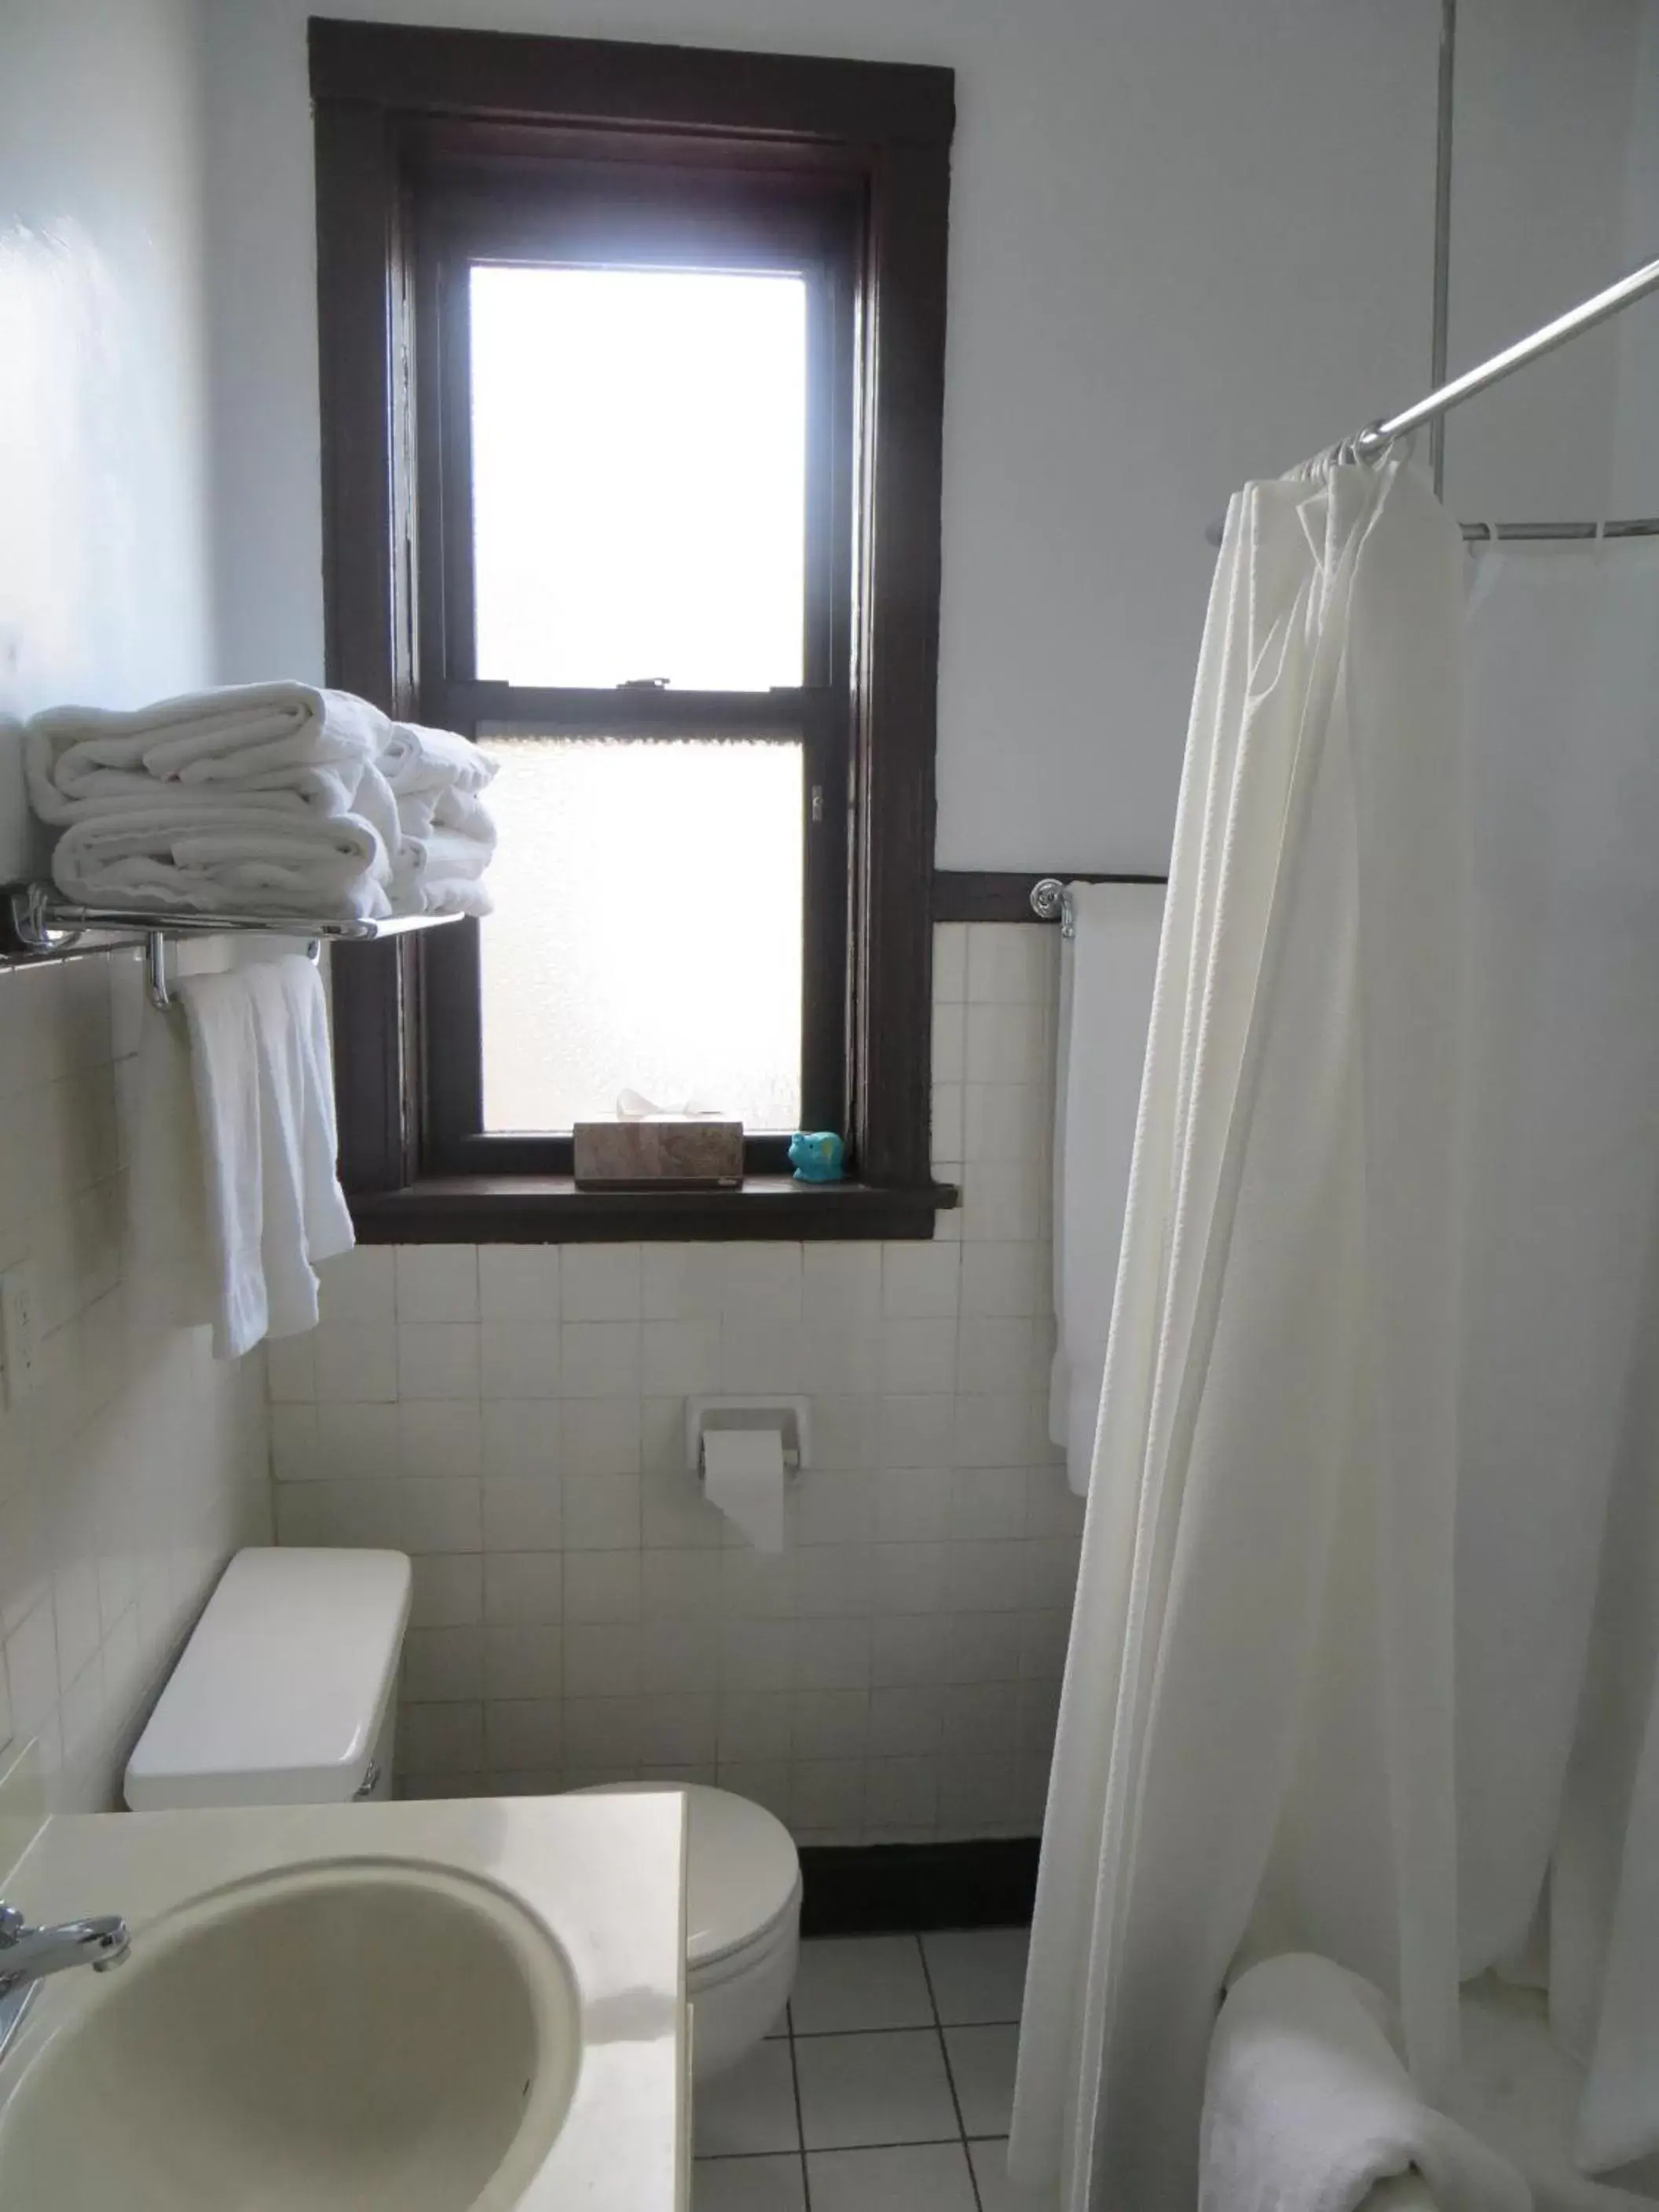 Bathroom in The Polo Inn Bridgeport U.S.A.